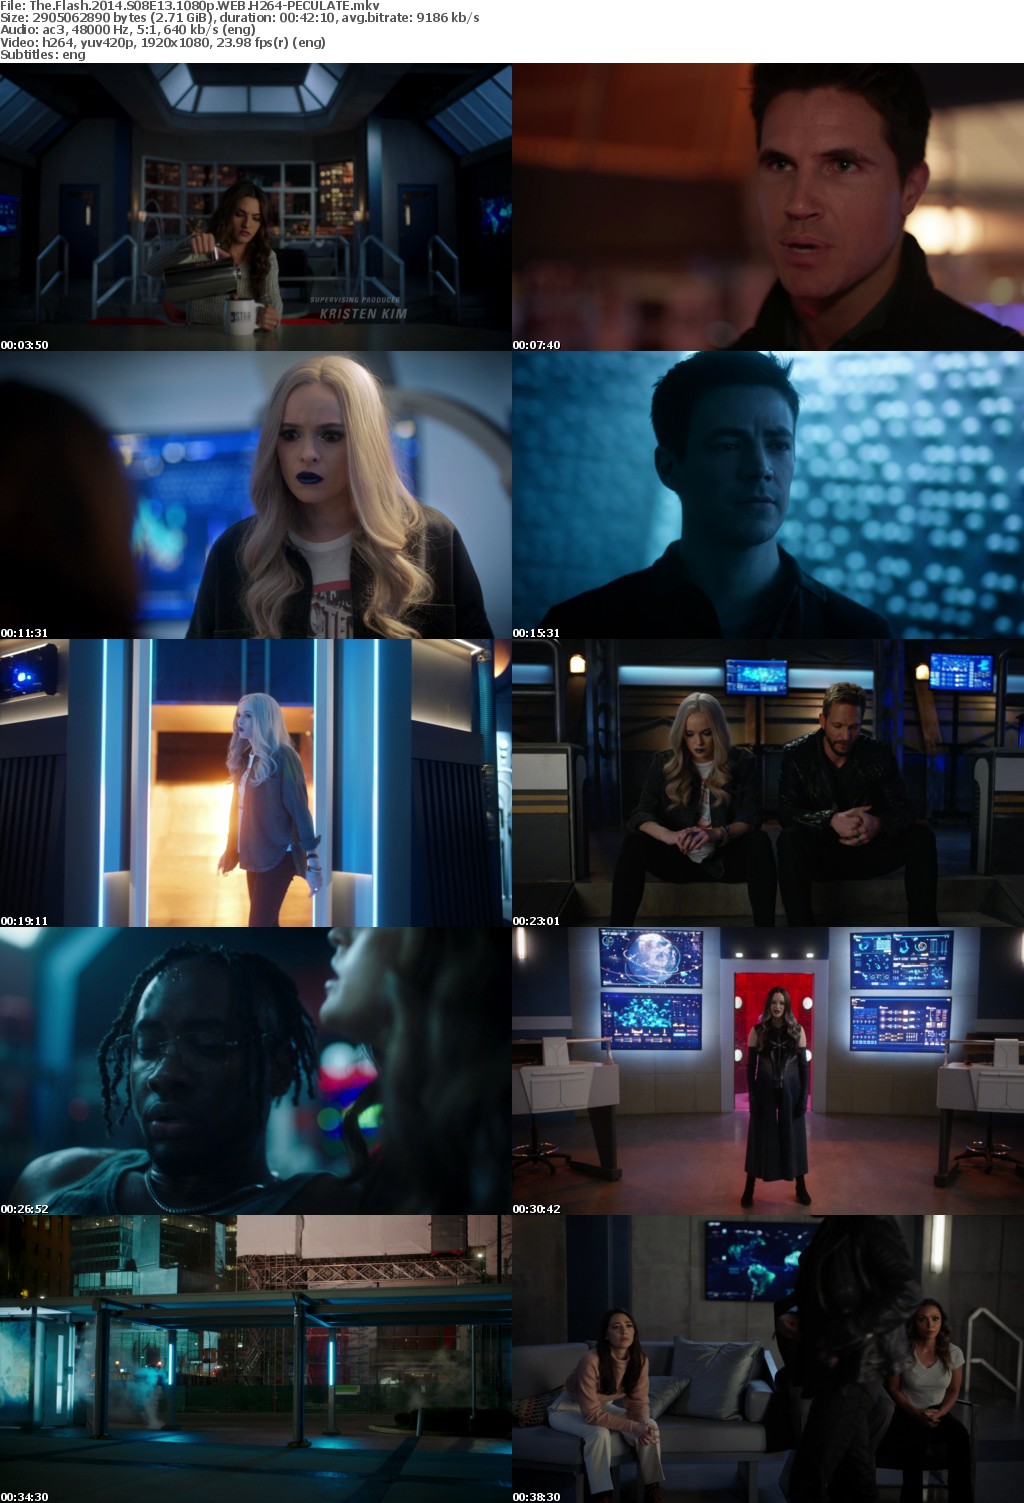 The Flash 2014 S08E13 1080p WEB H264-PECULATE